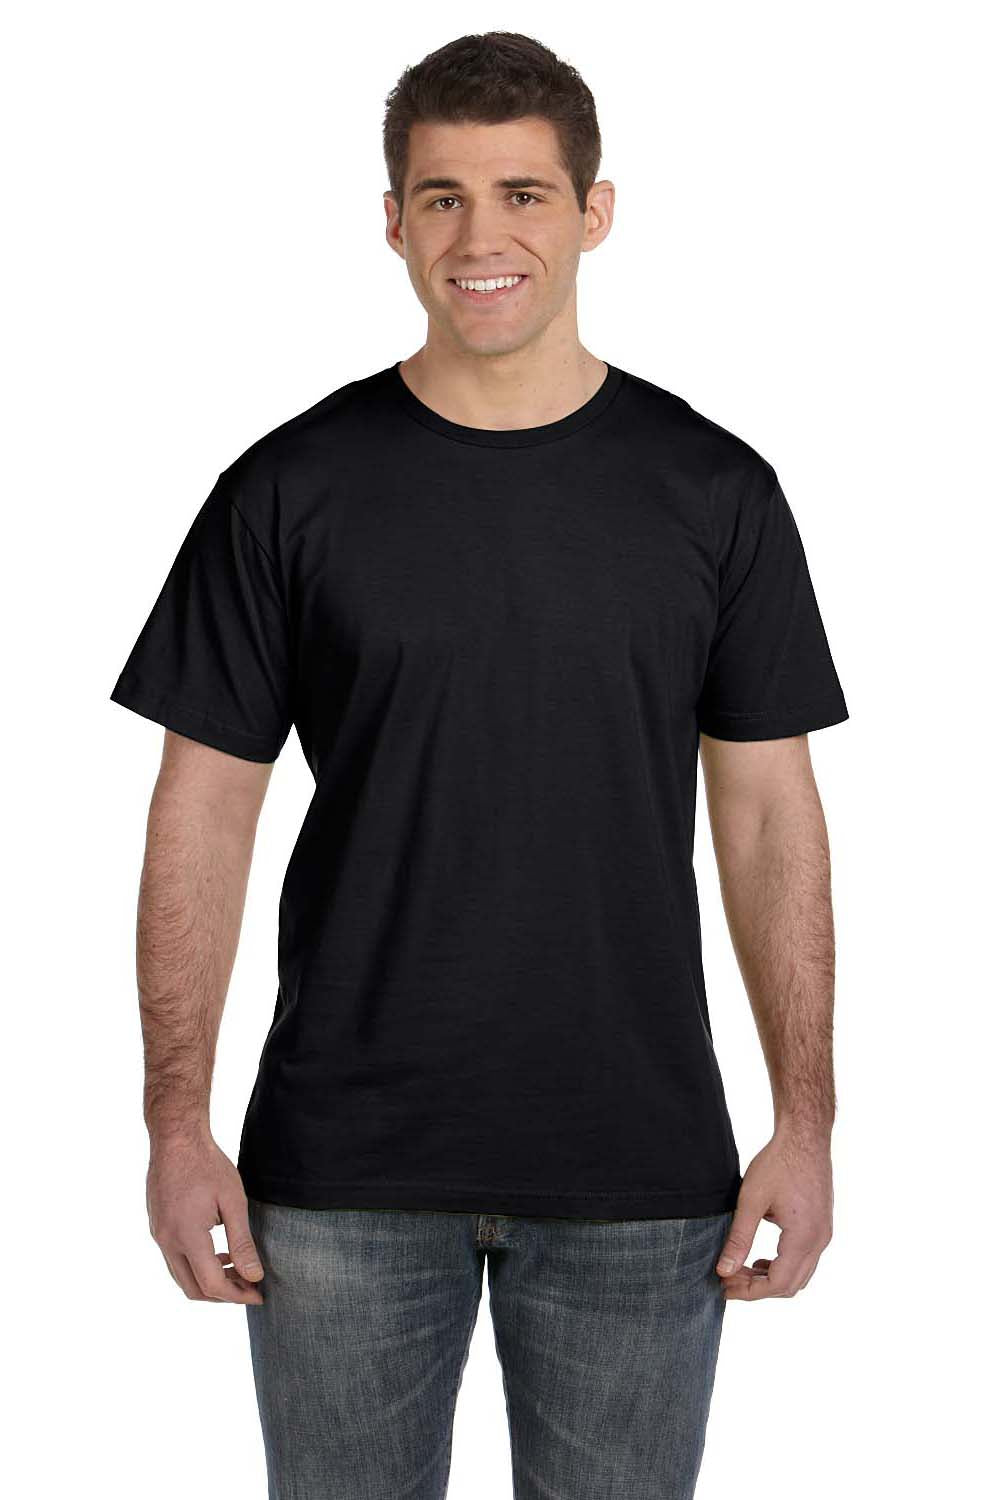 LAT 6901 Mens Fine Jersey Short Sleeve Crewneck T-Shirt Black Front